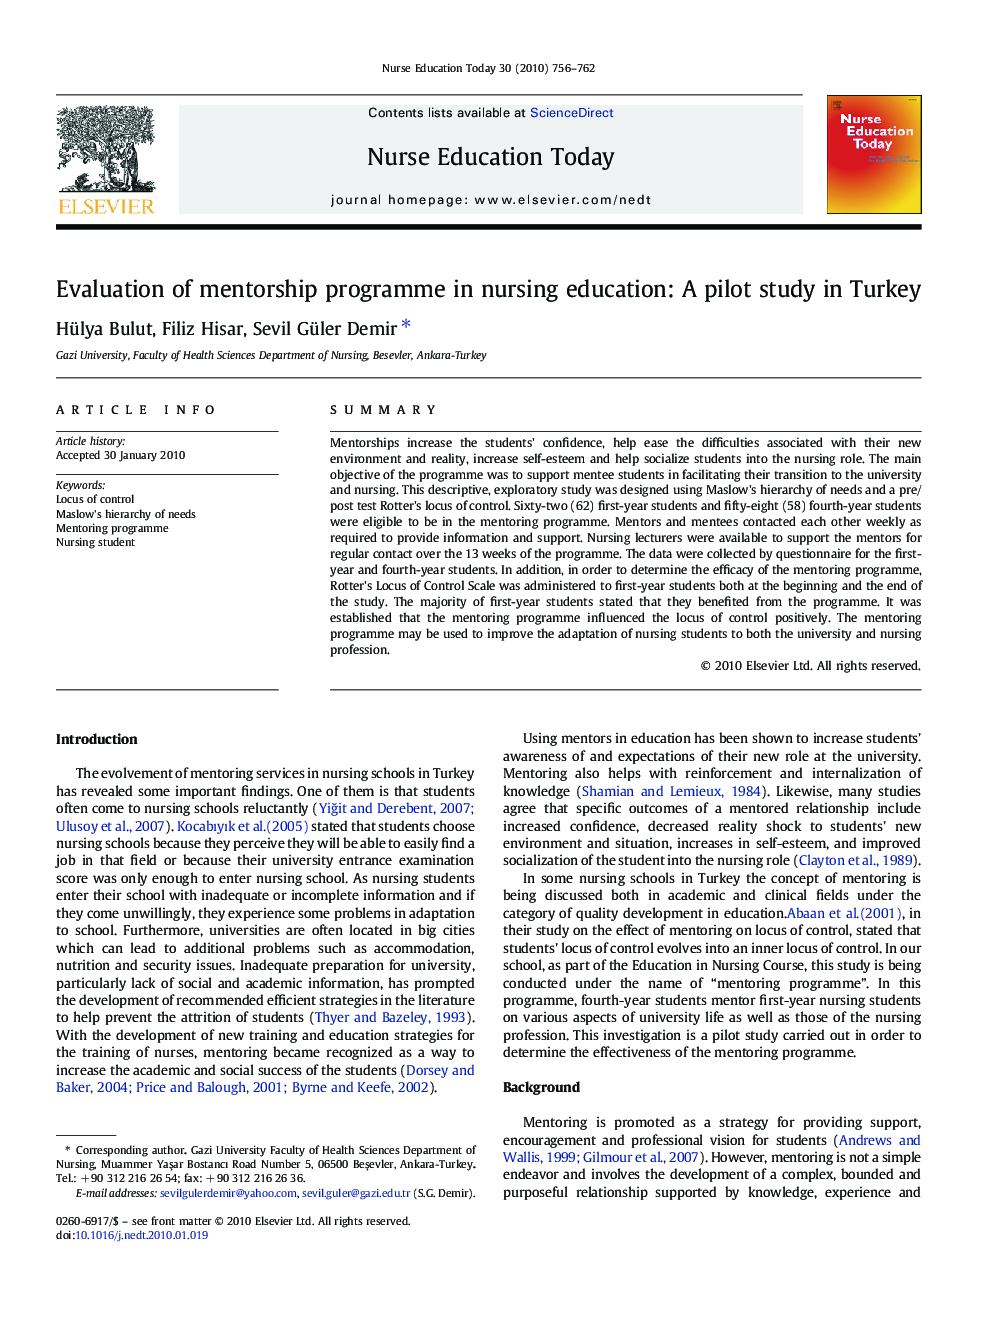 Evaluation of mentorship programme in nursing education: A pilot study in Turkey